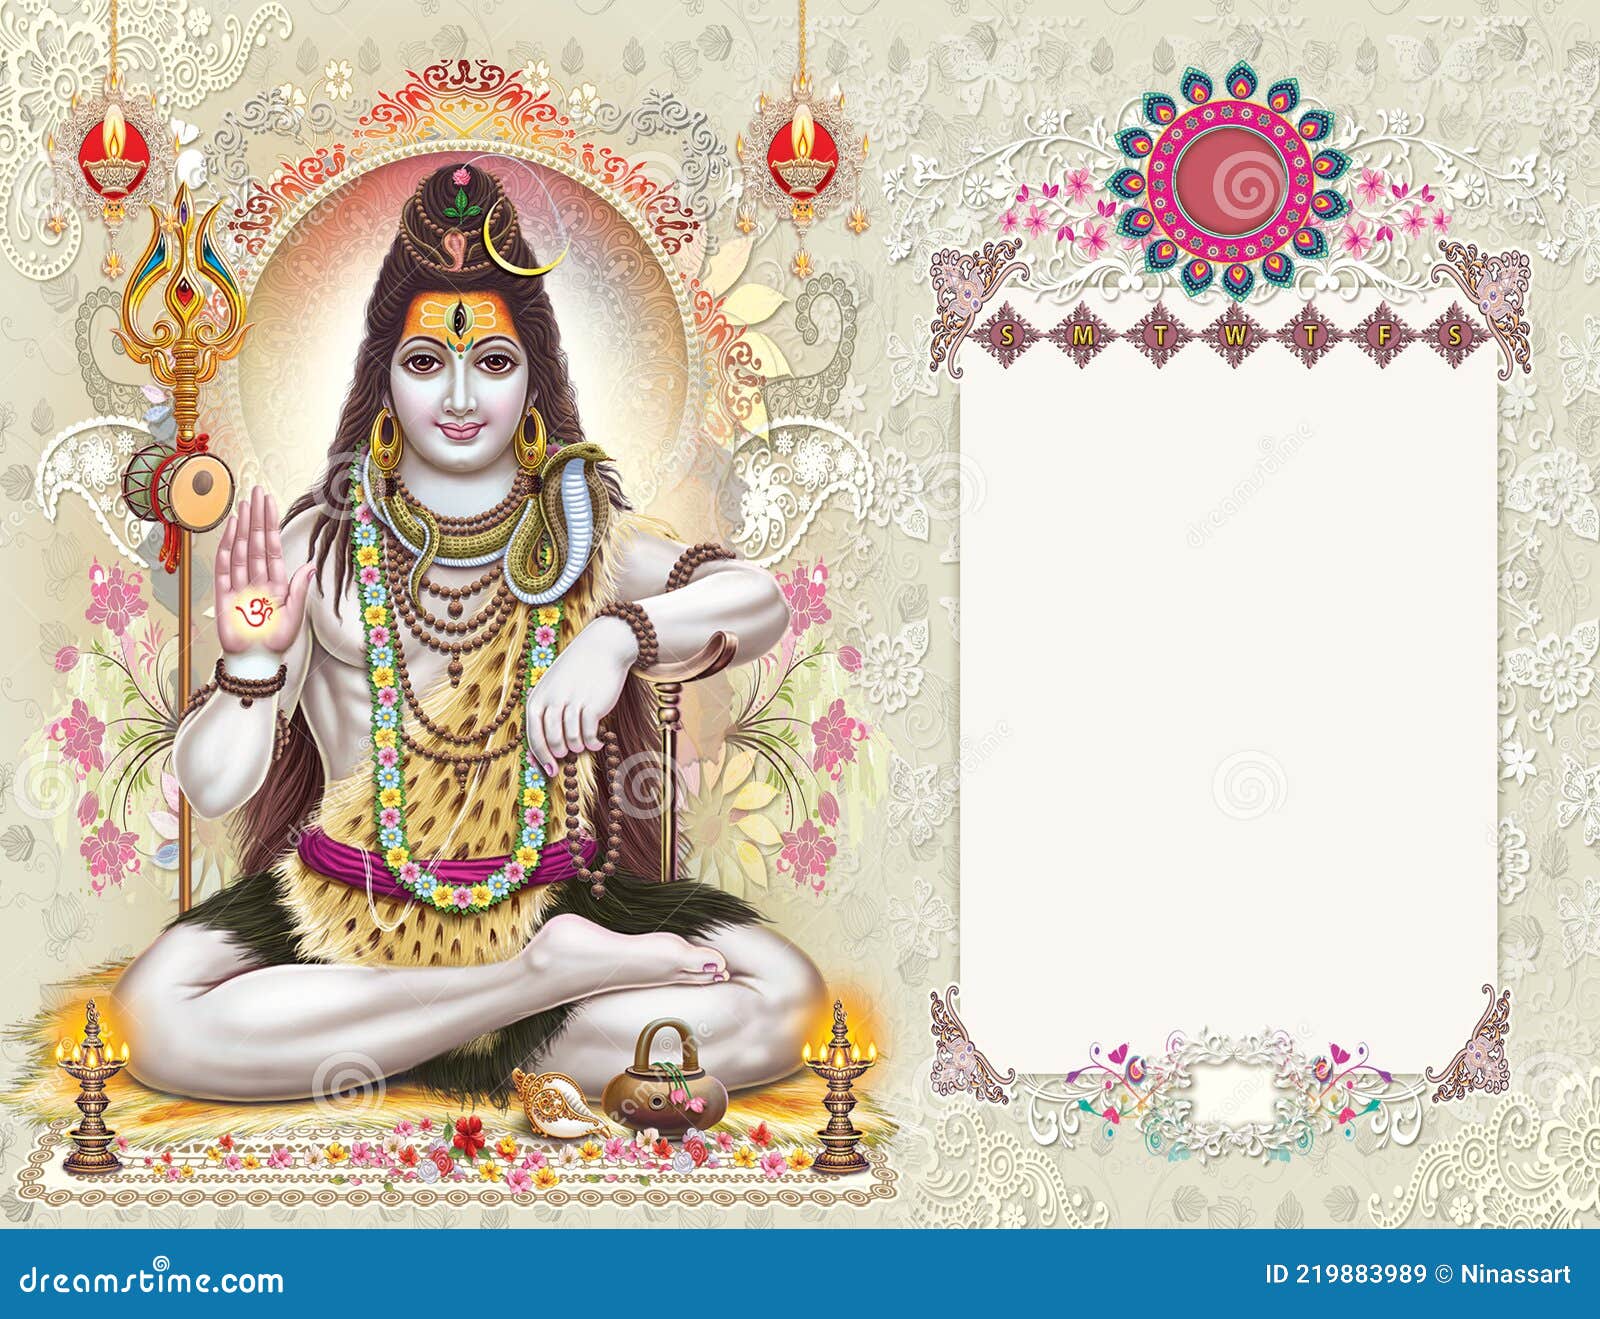 Lord Shiva High Resolution Digital Painting Stock Image - Image of sambhu,  decorative: 219883989